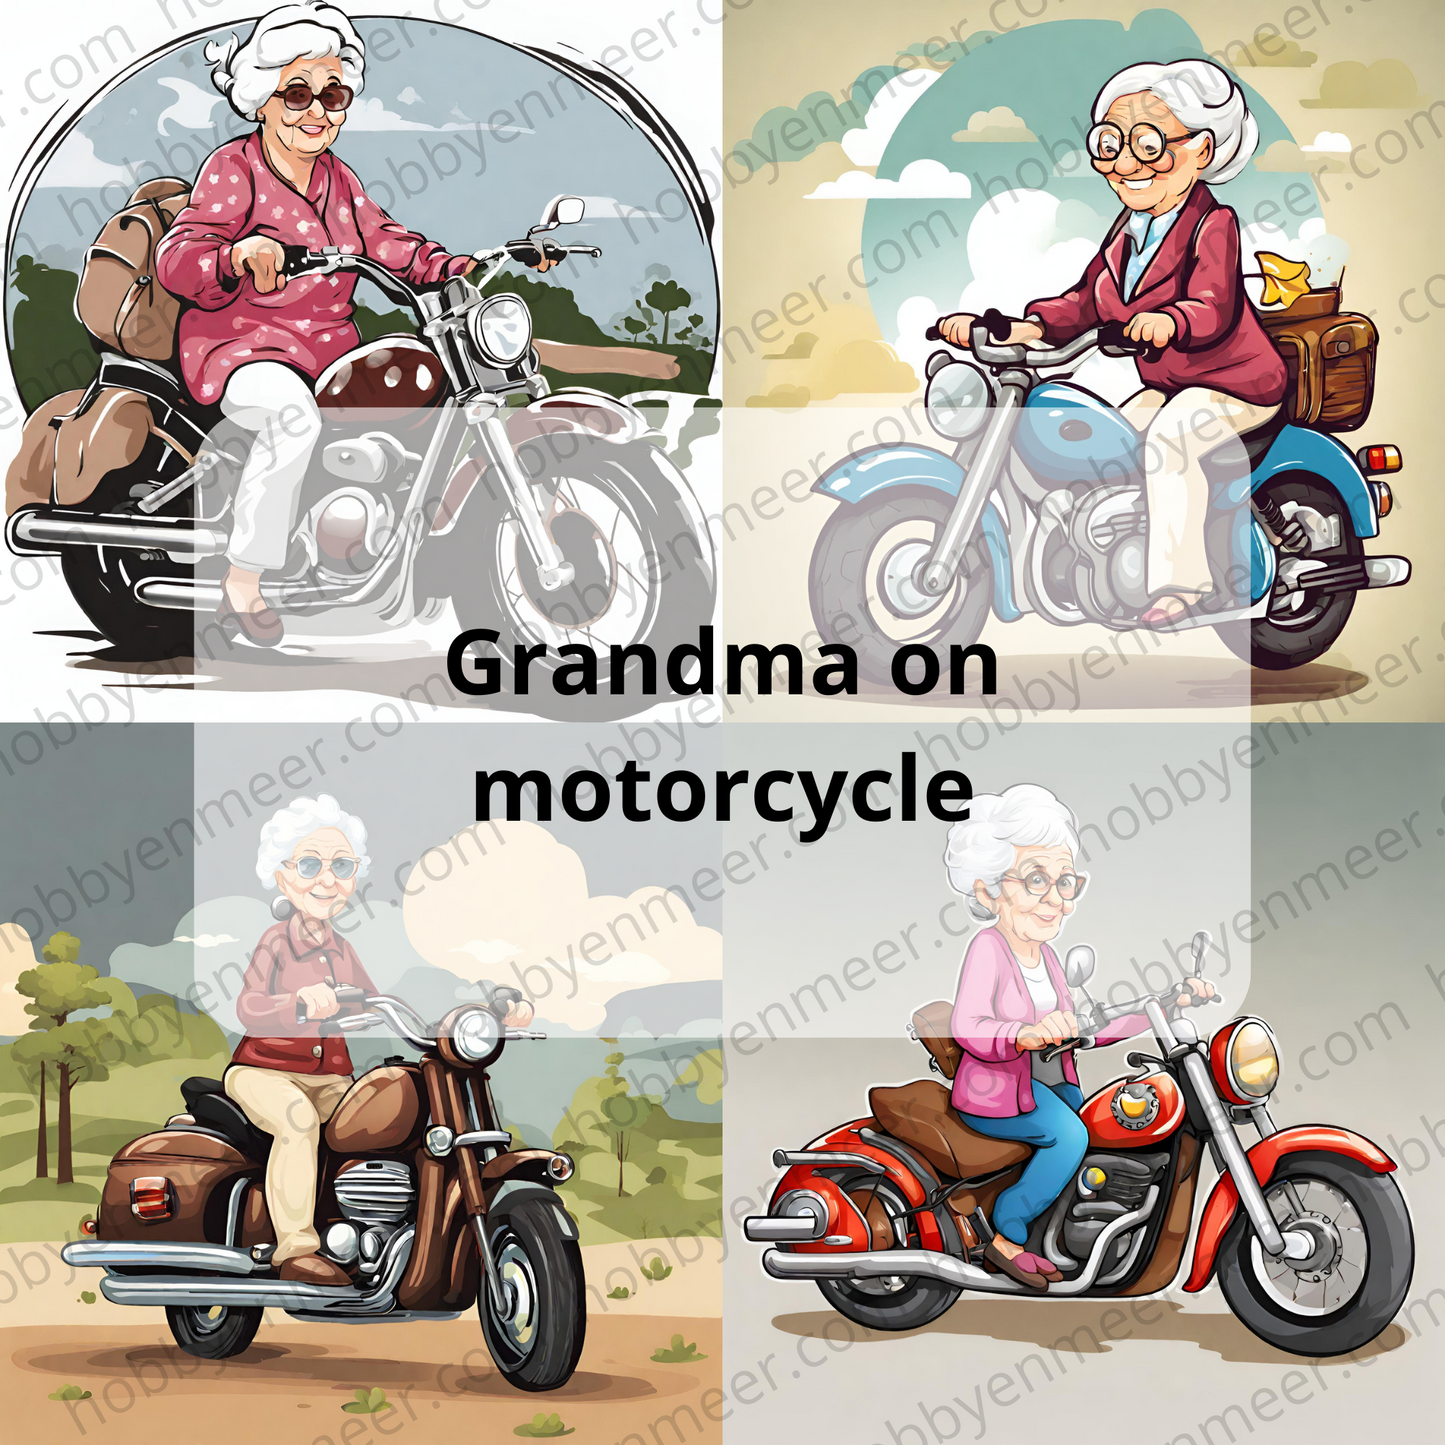 Grandma on motorcycle clipart